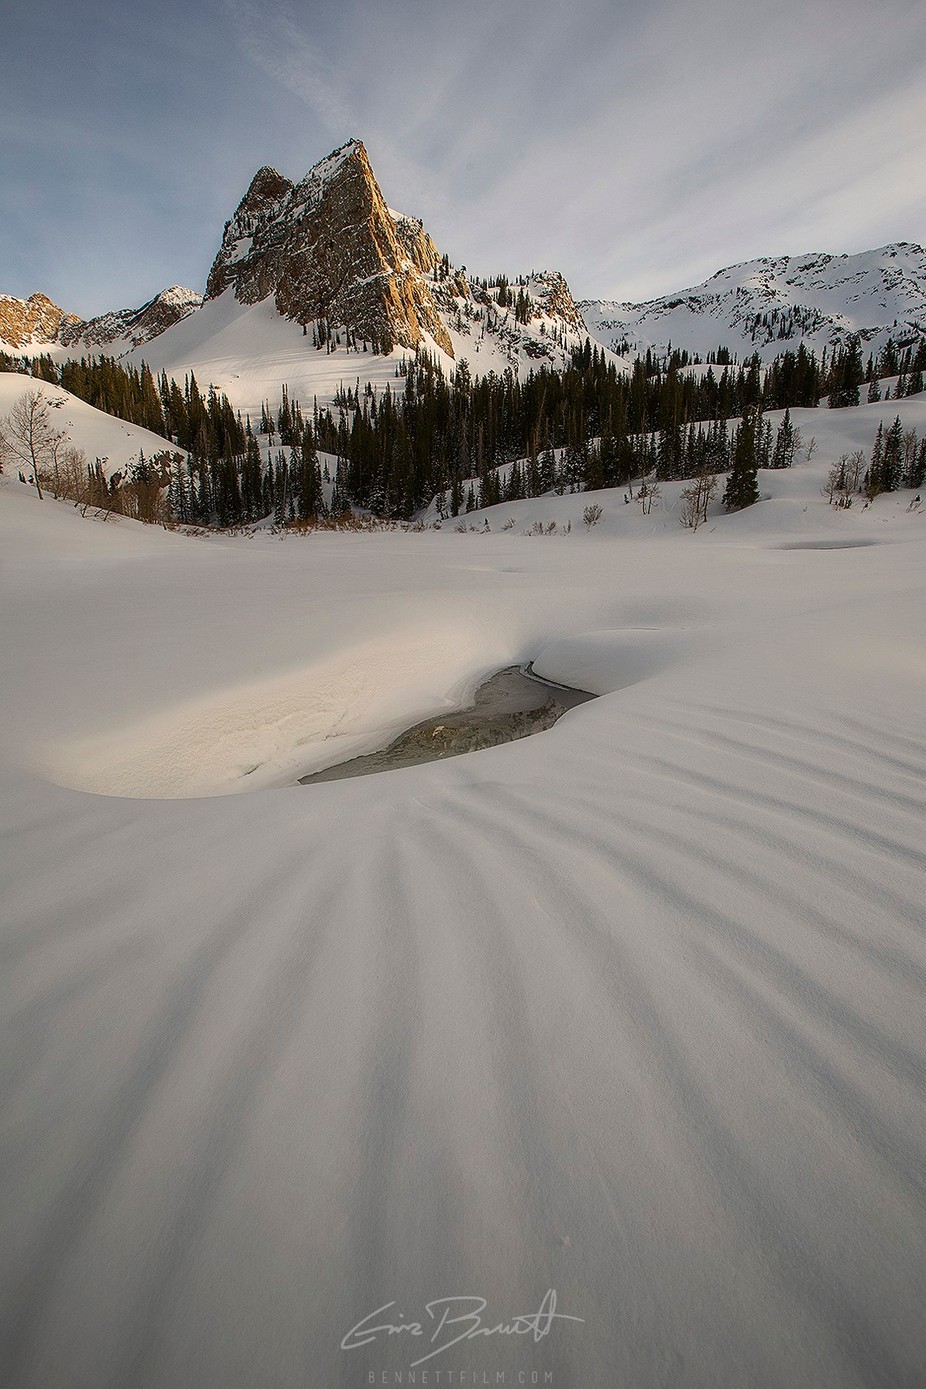 &quot;Sundial&quot; by ericbennett - Winter Wonderland Photo Contest